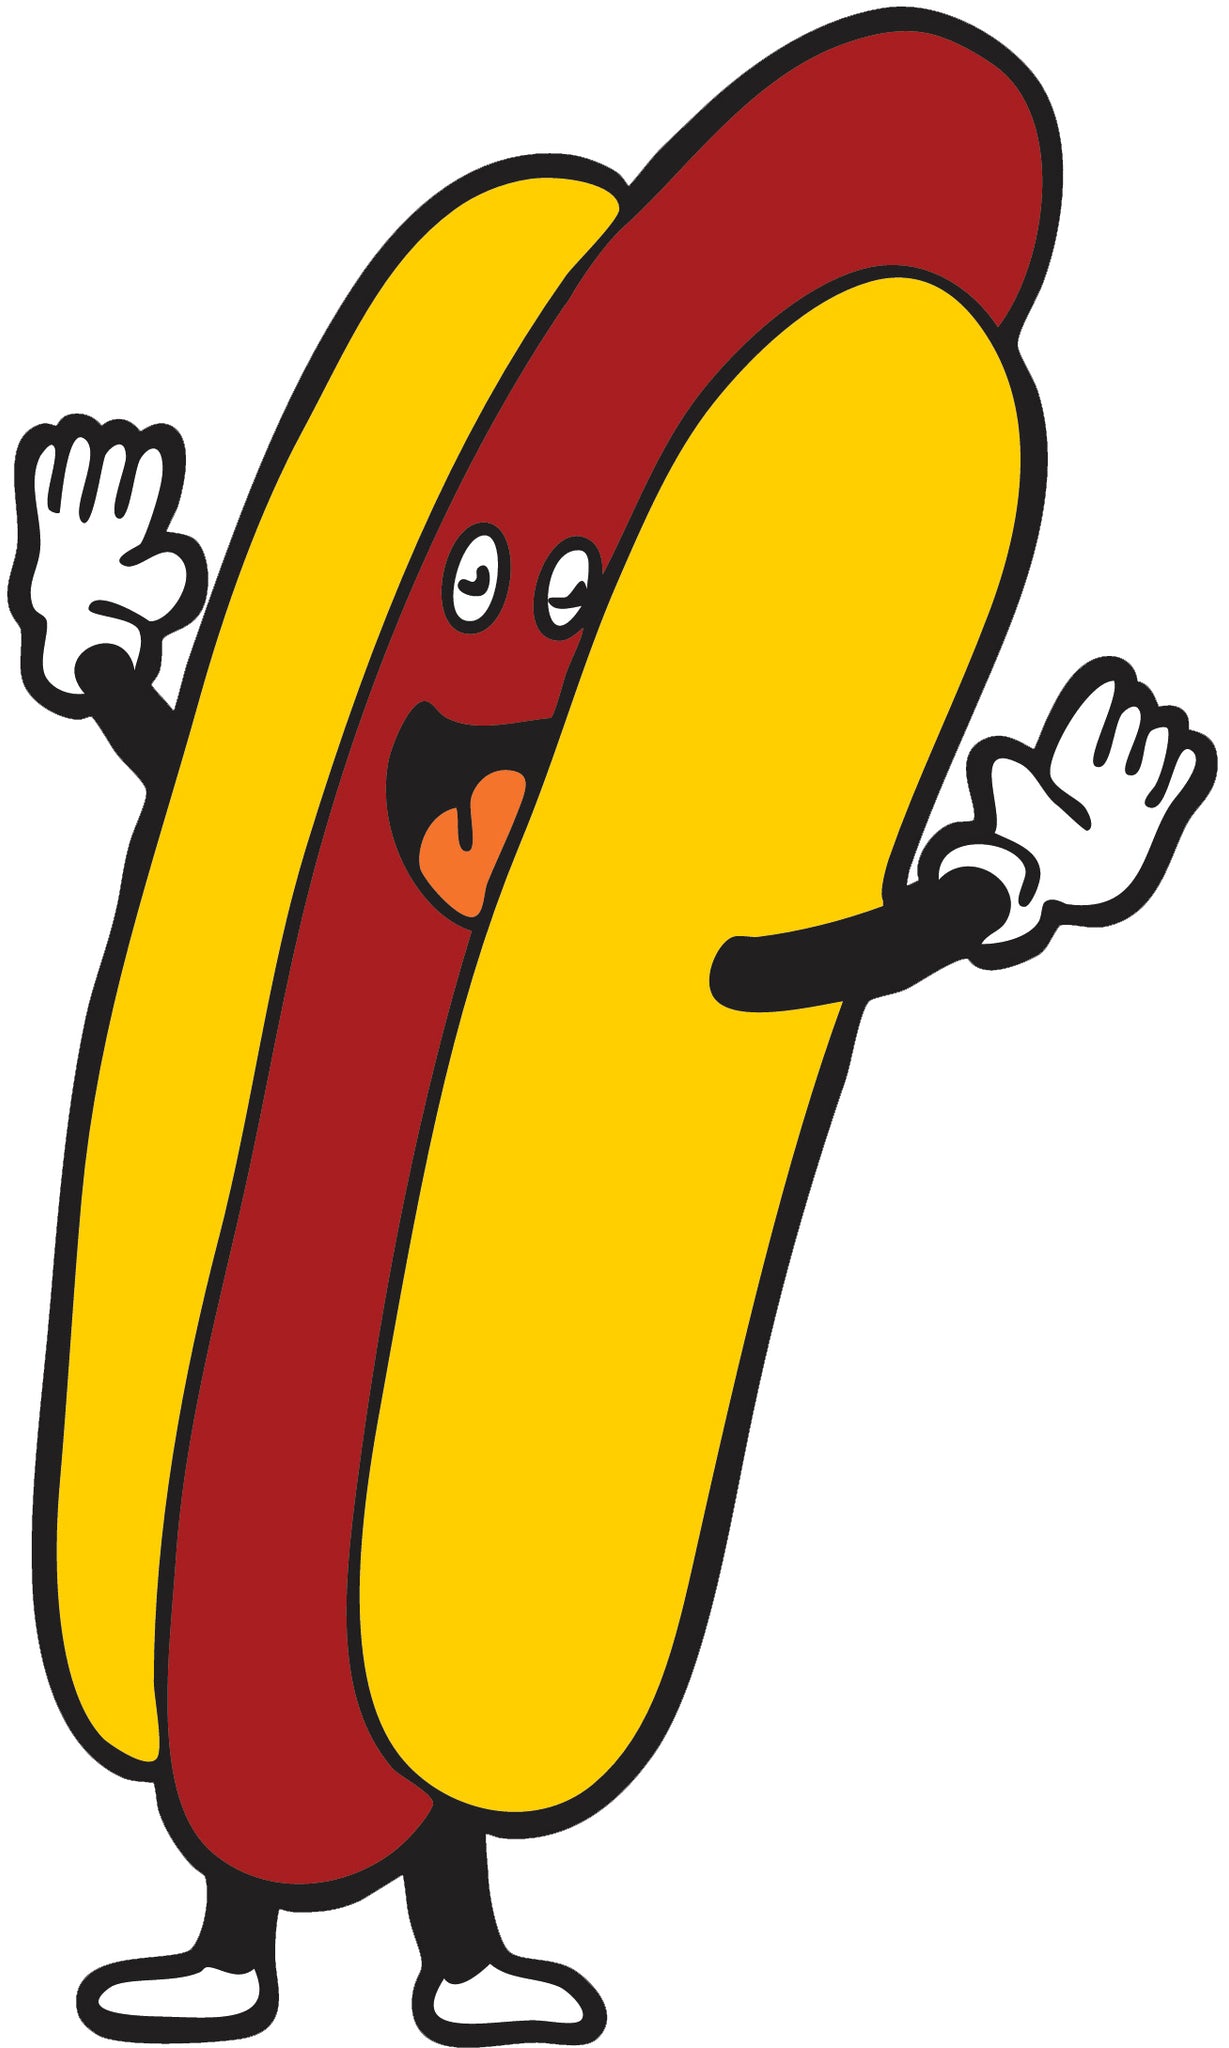 Happy Fast Food Emoji   Hot Dog 106510697 1024x1024@2x ?v=1505508552